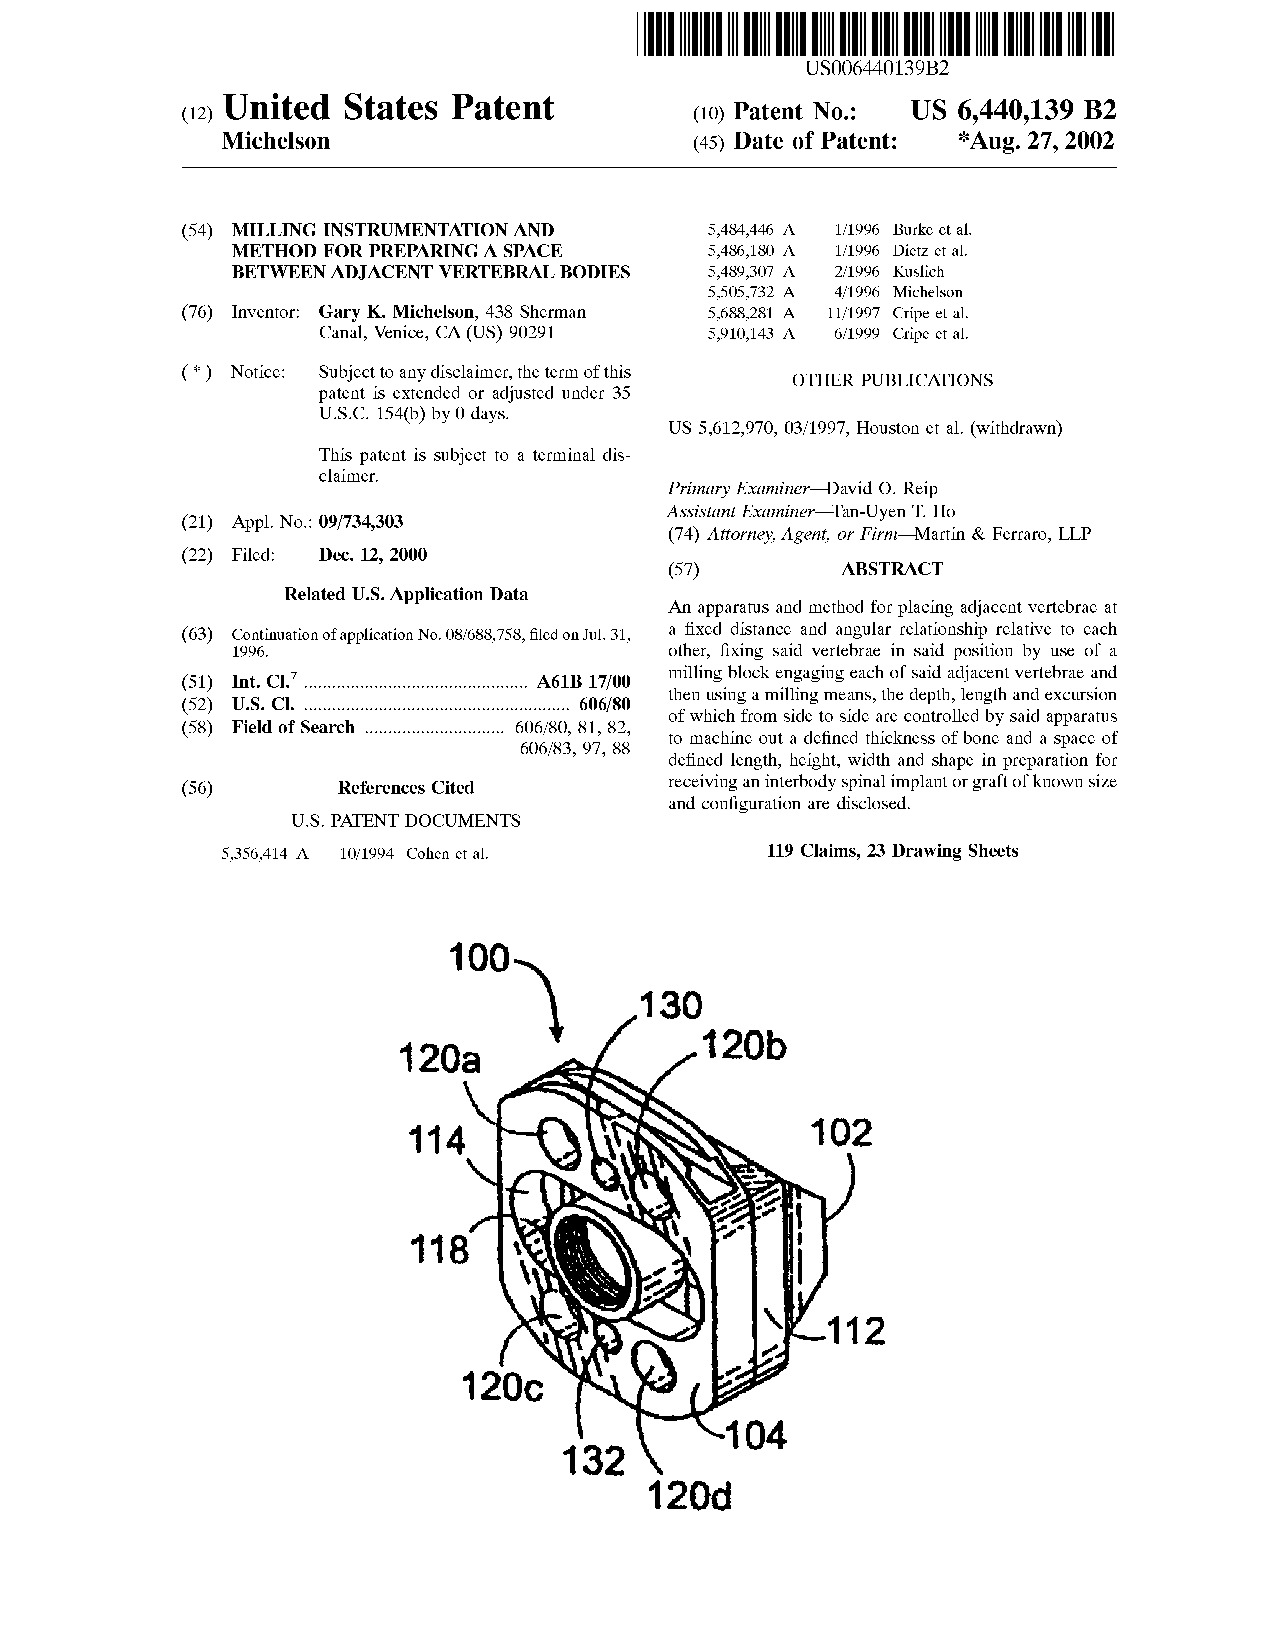 Milling instrumentation and method for preparing a space between adjacent     vertebral bodies - Patent 6,440,139